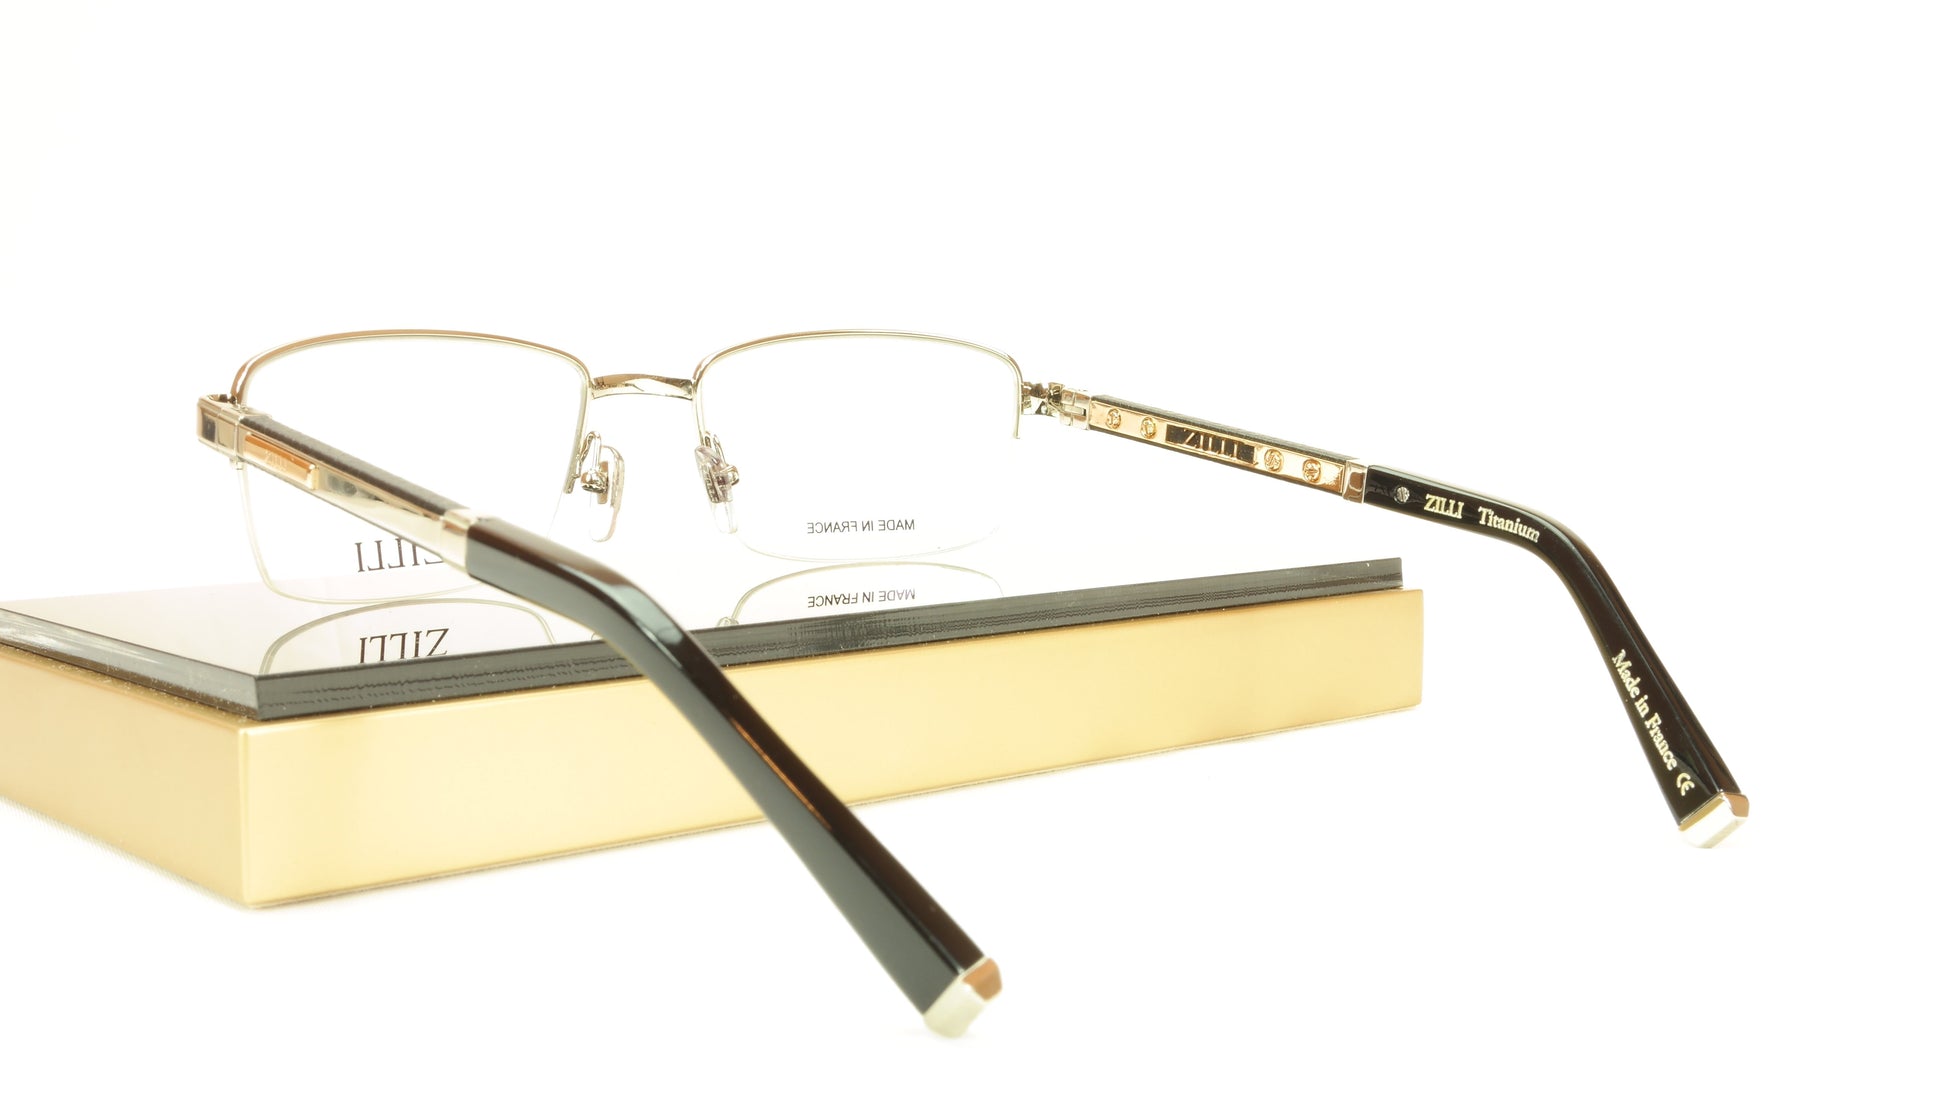 ZILLI Eyeglasses Frame Acetate Leather Titanium France Hand Made ZI 60014 C02 - Frame Bay